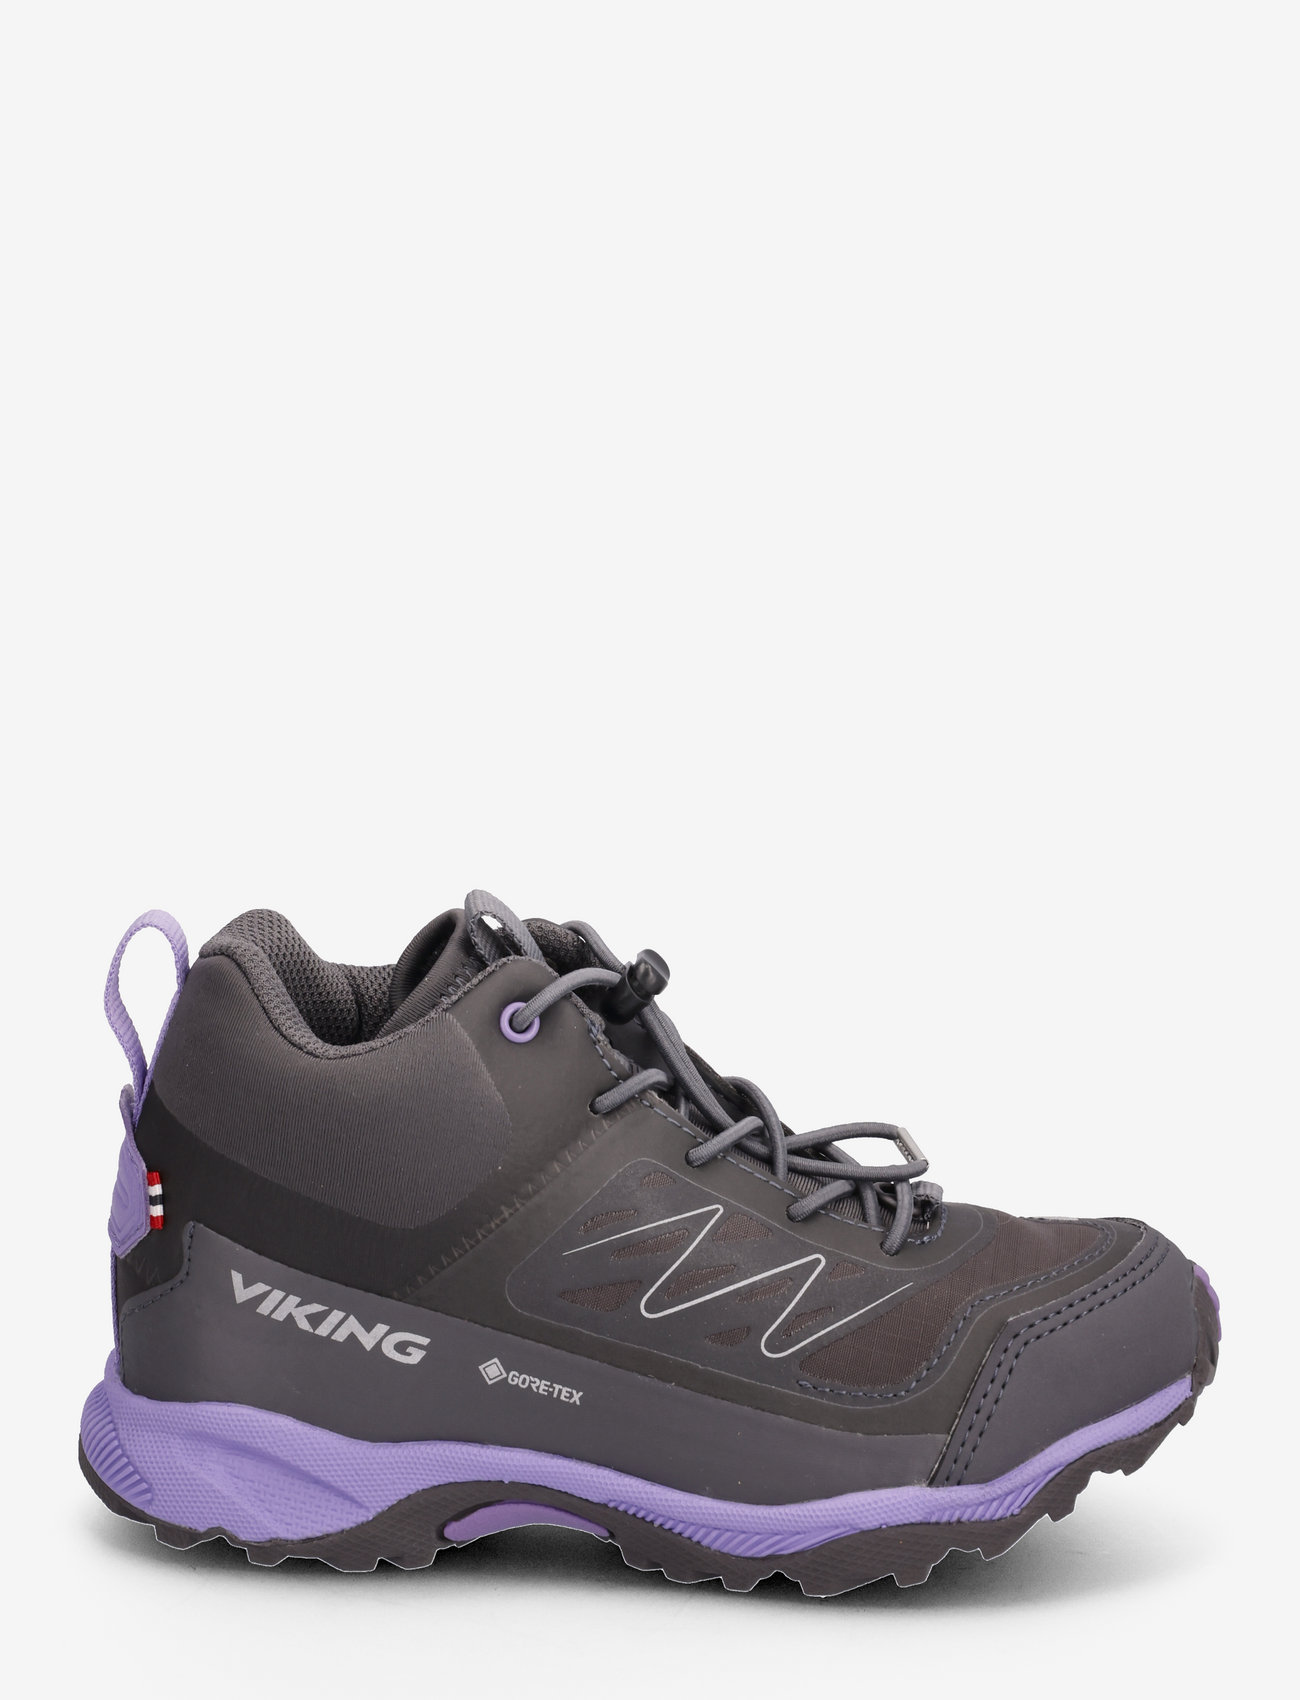 Viking - Tind Mid GTX - sneakers med høyt skaft - charcoal/violet - 1